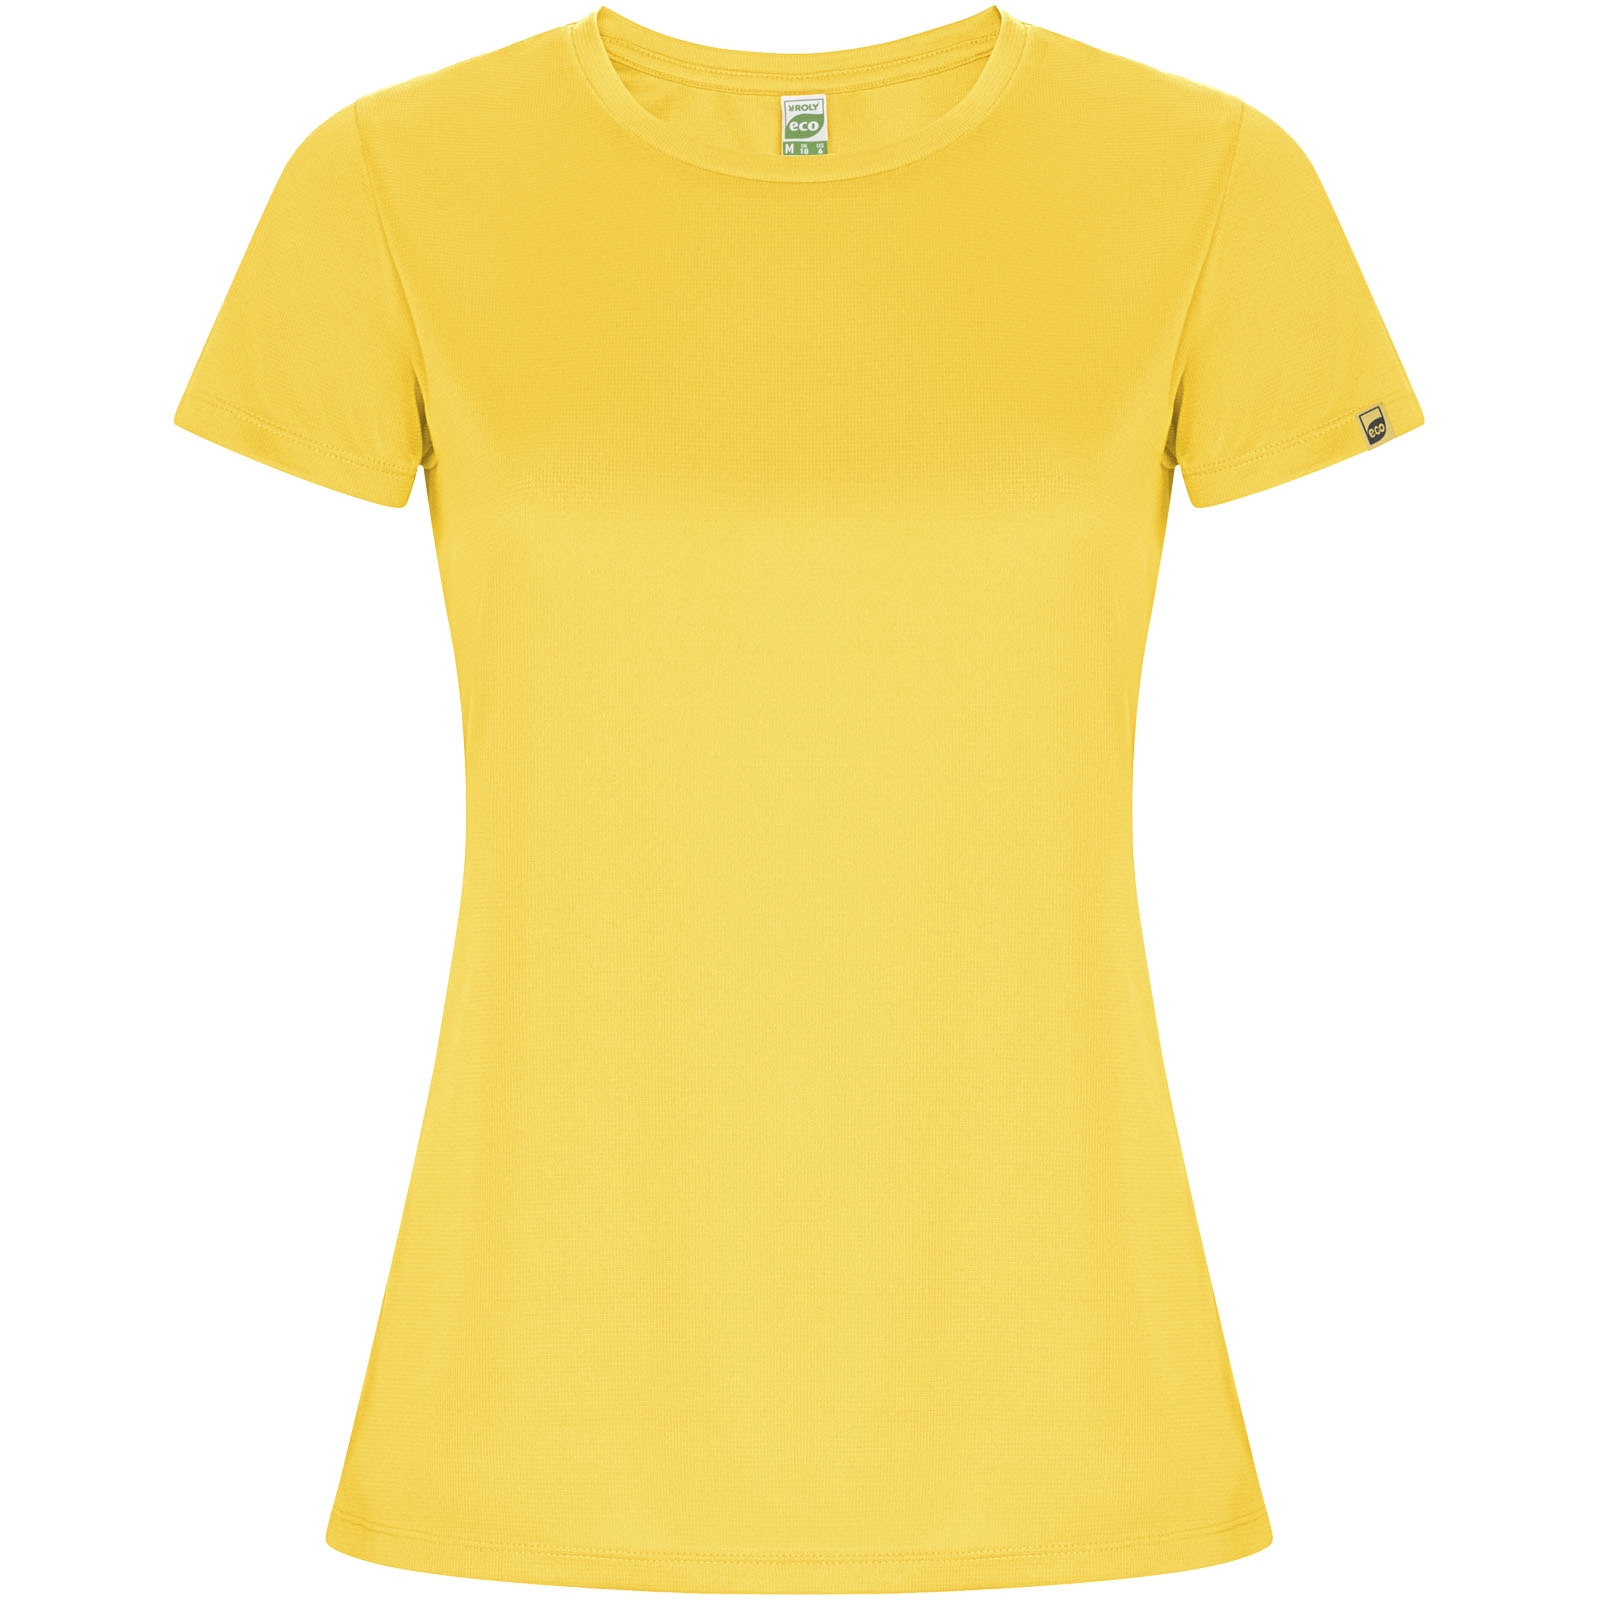 Clothing - Imola short sleeve women's sports t-shirt